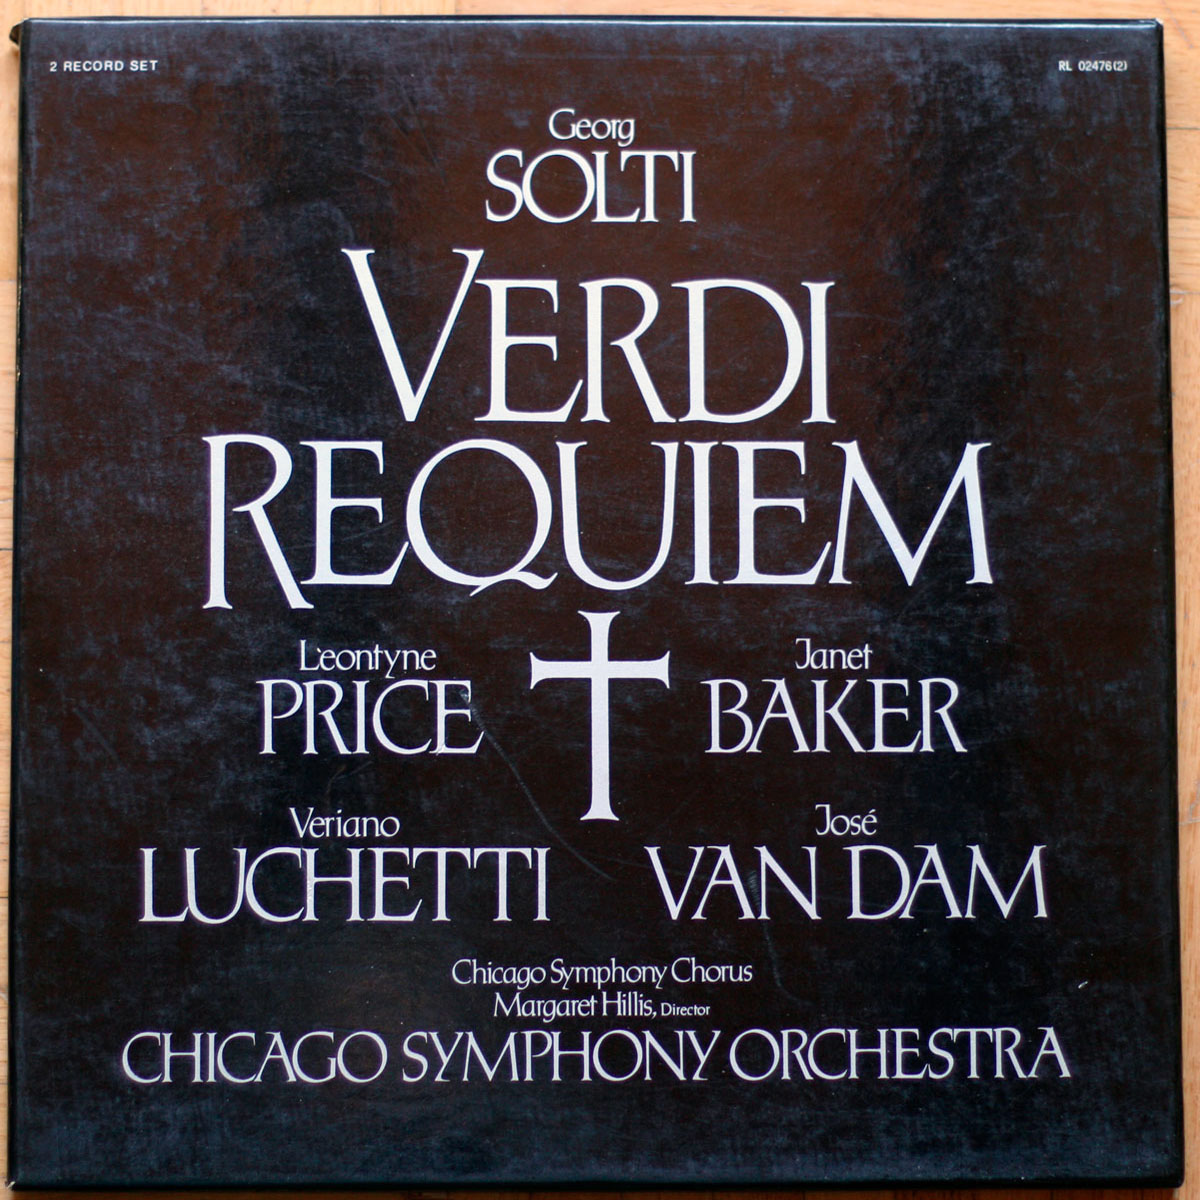 Verdi • Requiem • RCA RL 02476 • José van Dam • Janet Baker • Leontyne Price • Veriano Luchetti • Chicago Symphony Orchestra • Georg Solti